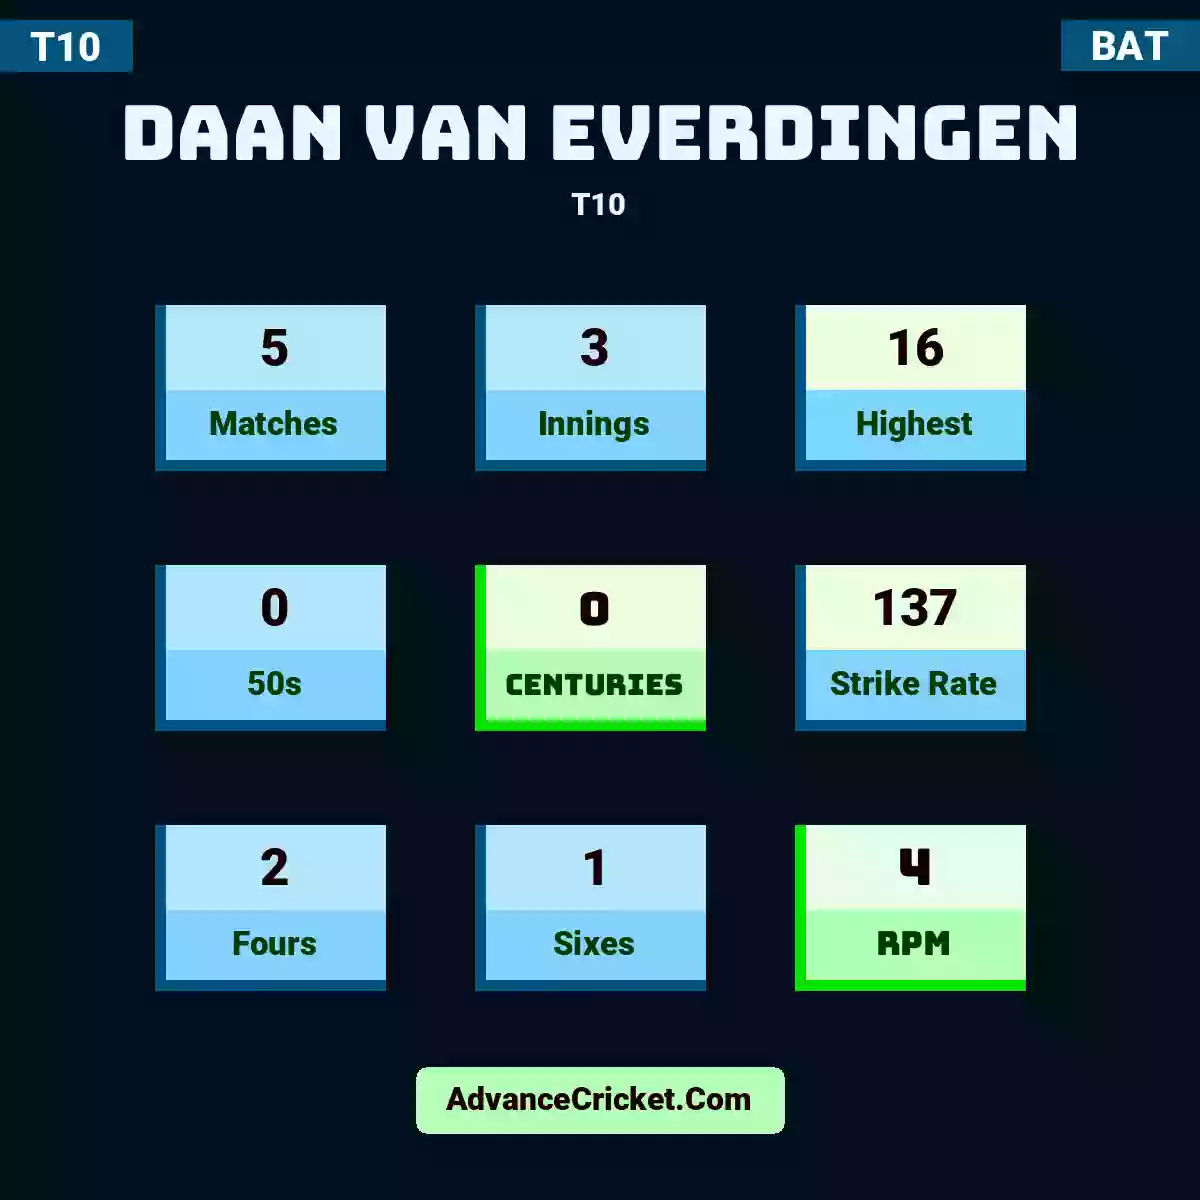 Daan Van Everdingen T10 , Daan Van Everdingen played 5 matches, scored 16 runs as highest, 0 half-centuries, and 0 centuries, with a strike rate of 137. D.Everdingen hit 2 fours and 1 sixes, with an RPM of 4.